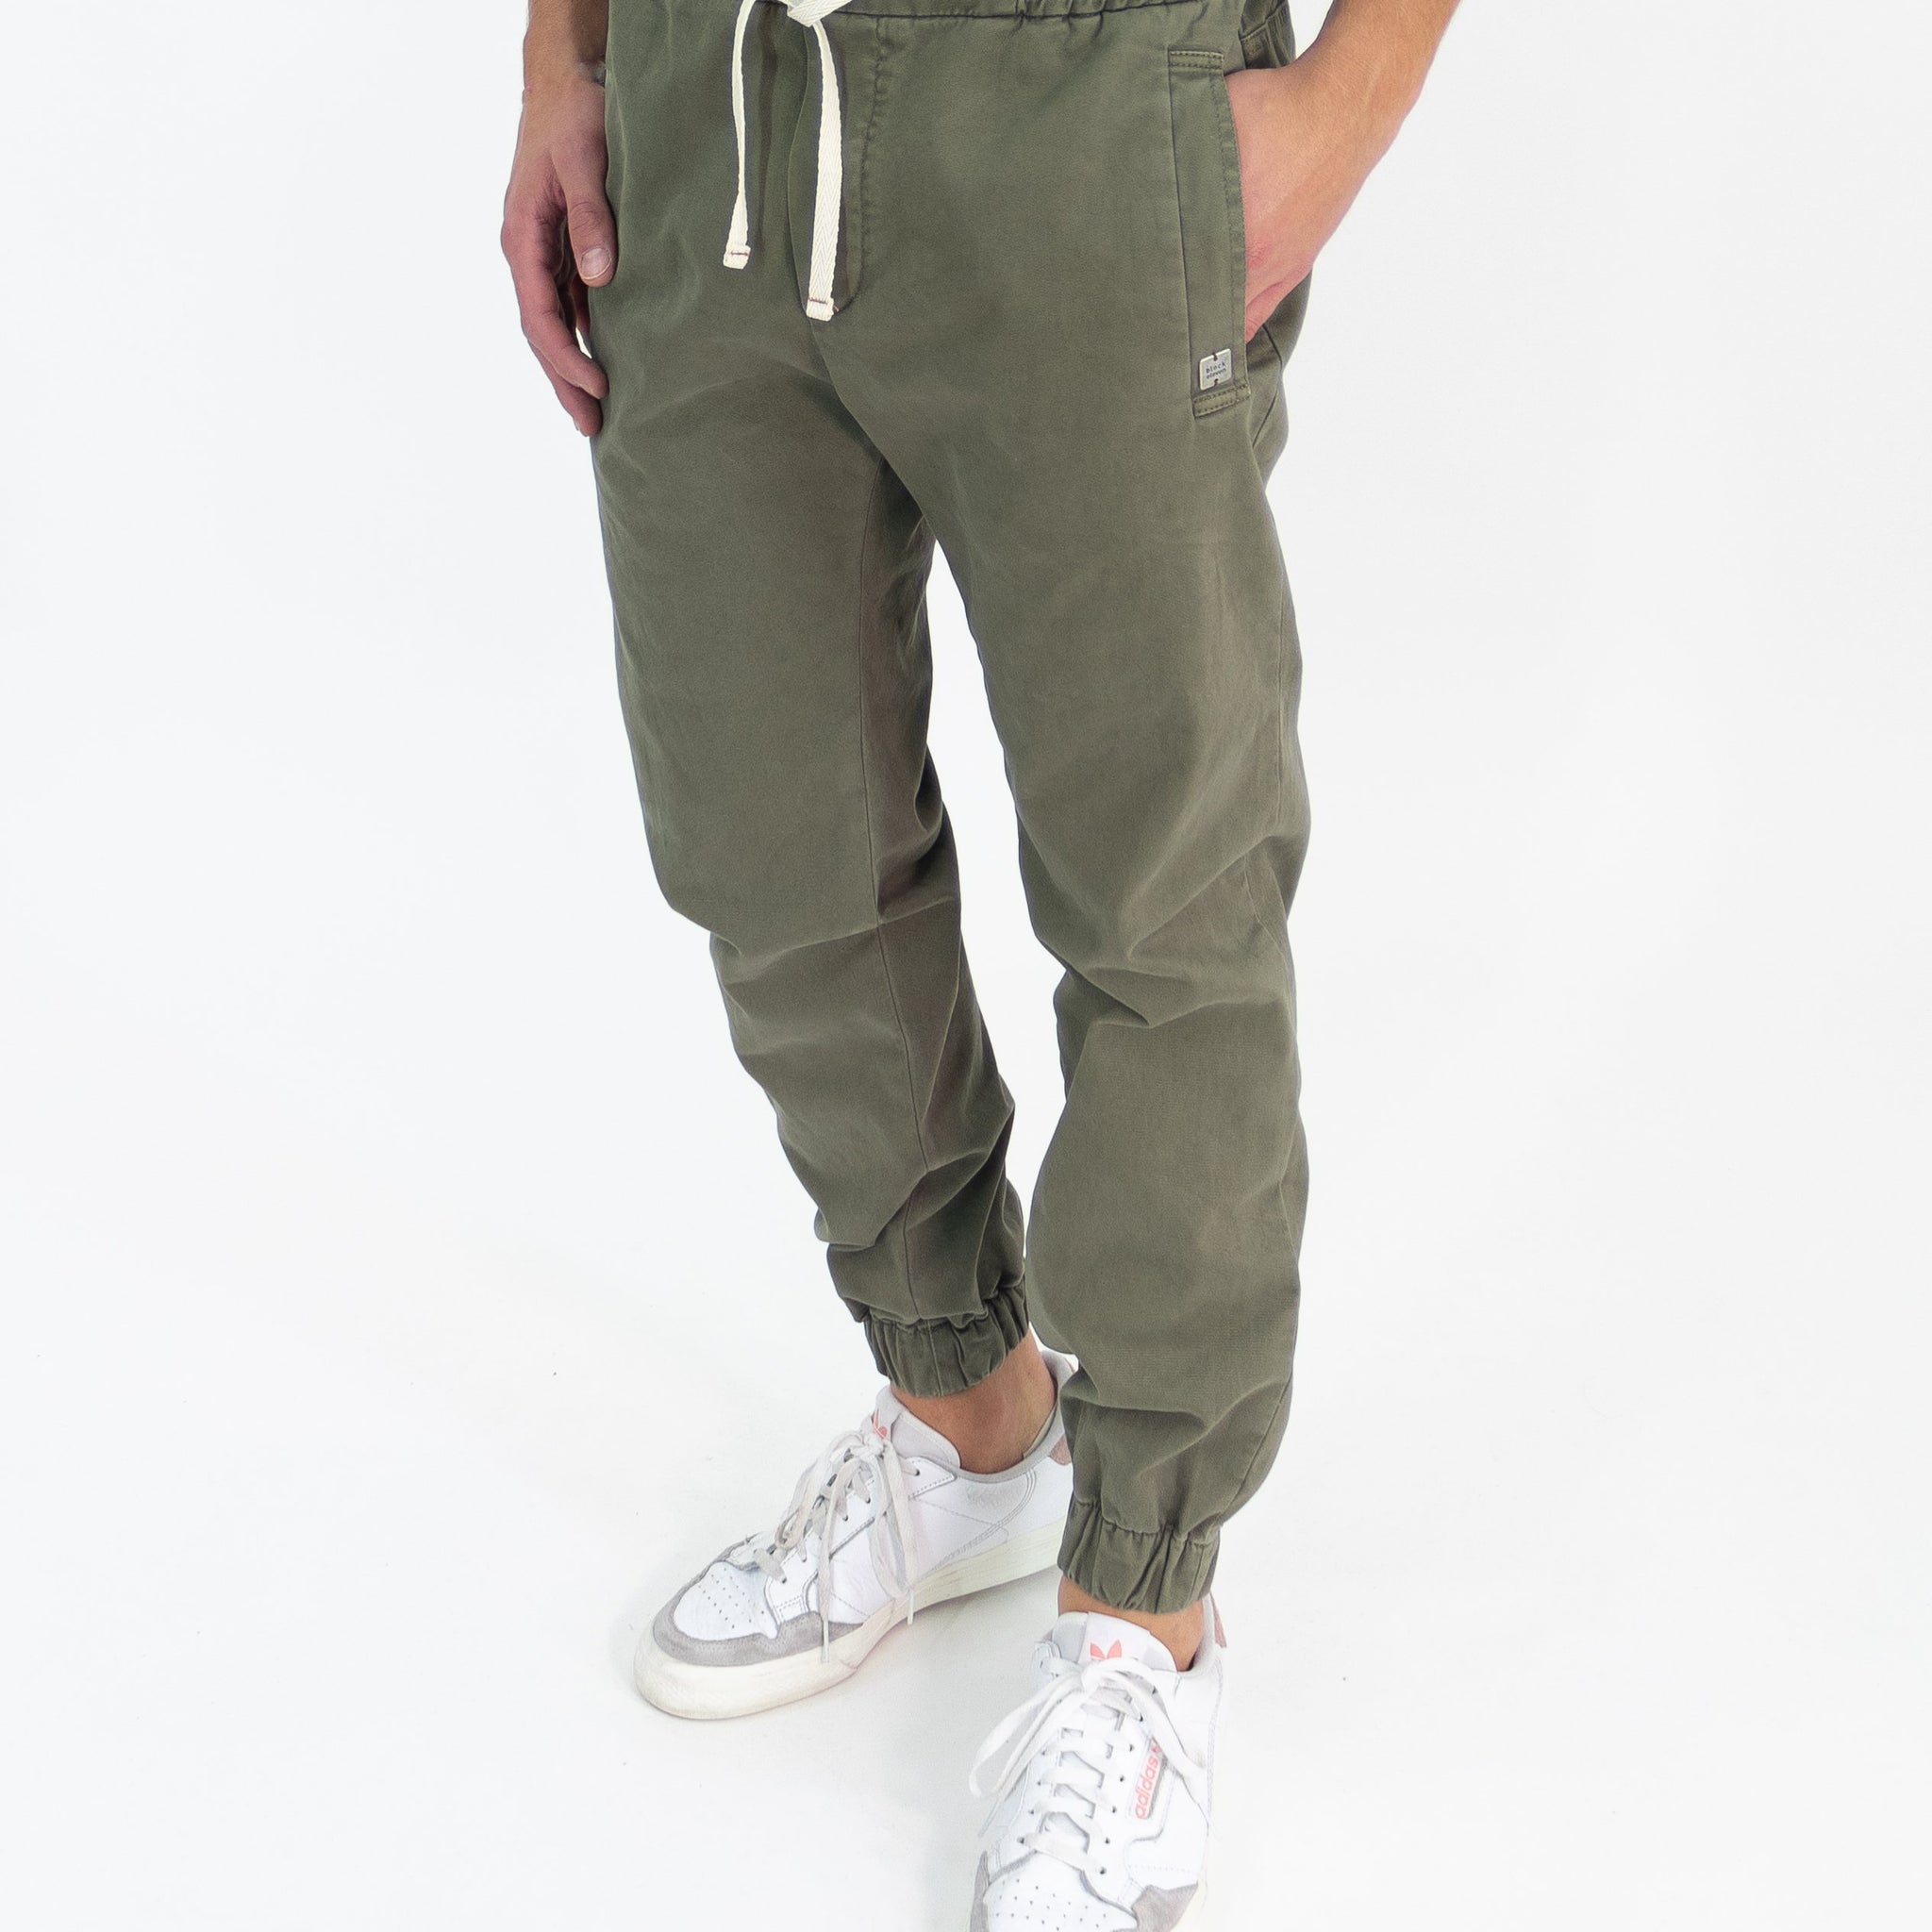 Pantalone con elastico verde salvia